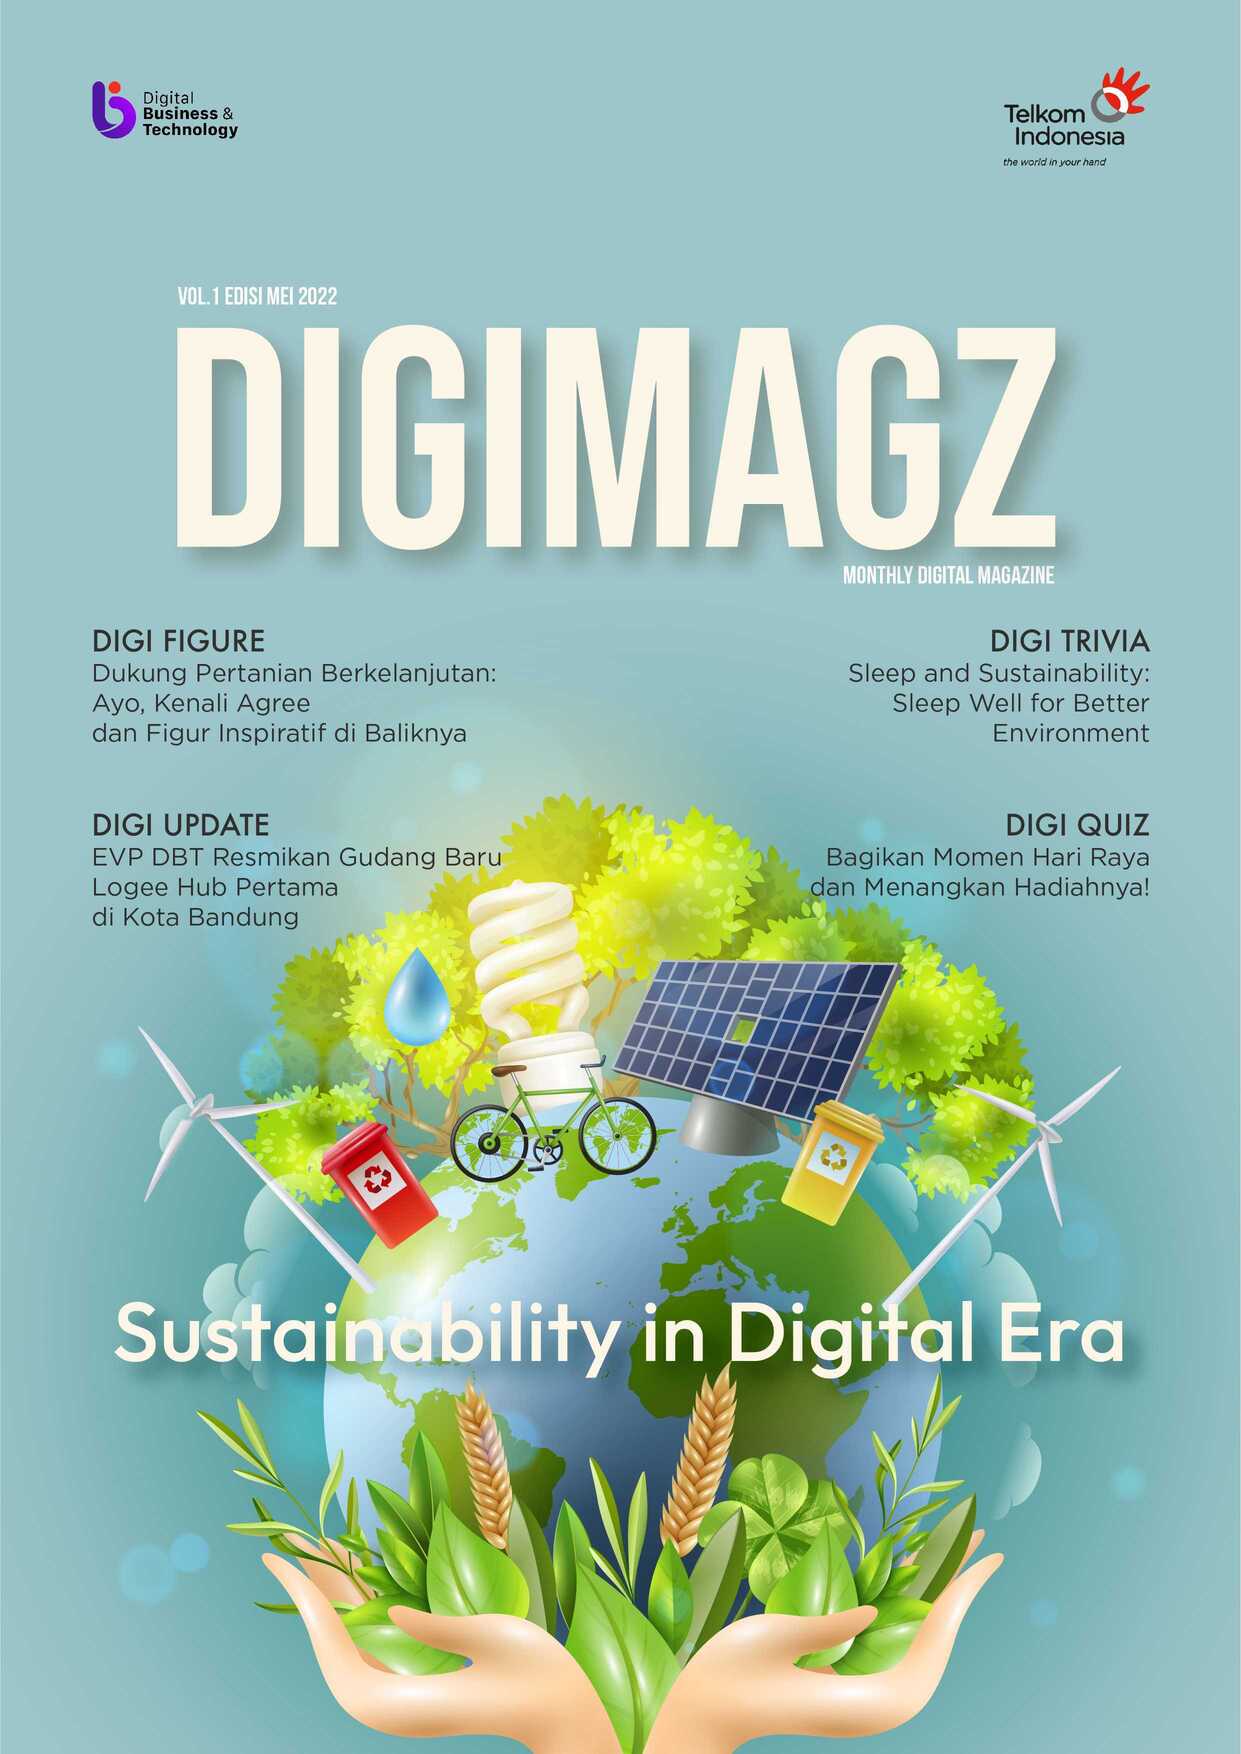 Digimagz Mei 2022 "Sustainability in Digital Era"